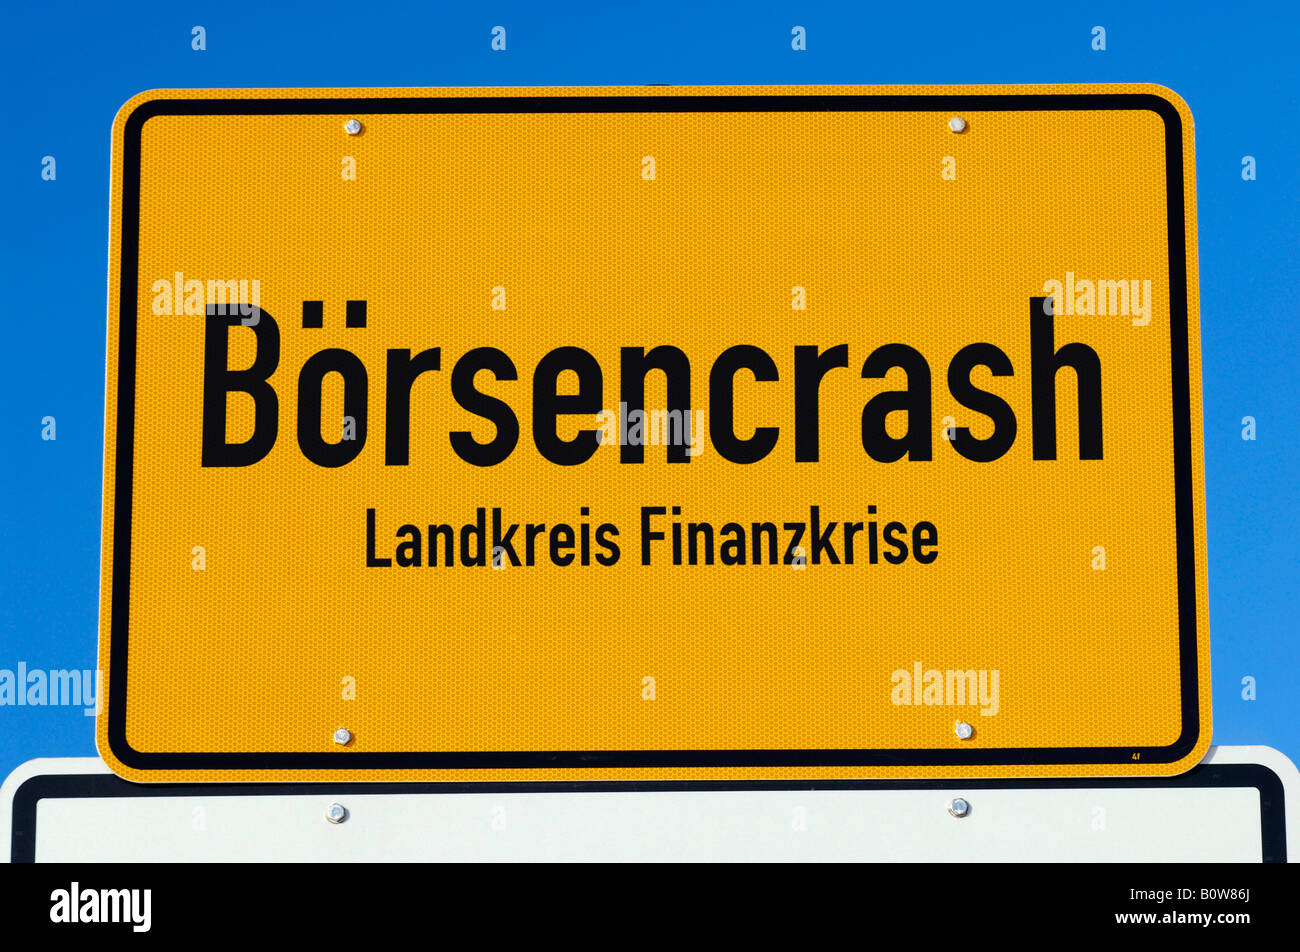 Boersencrash (Ger. for stock market crash) Stock Photo